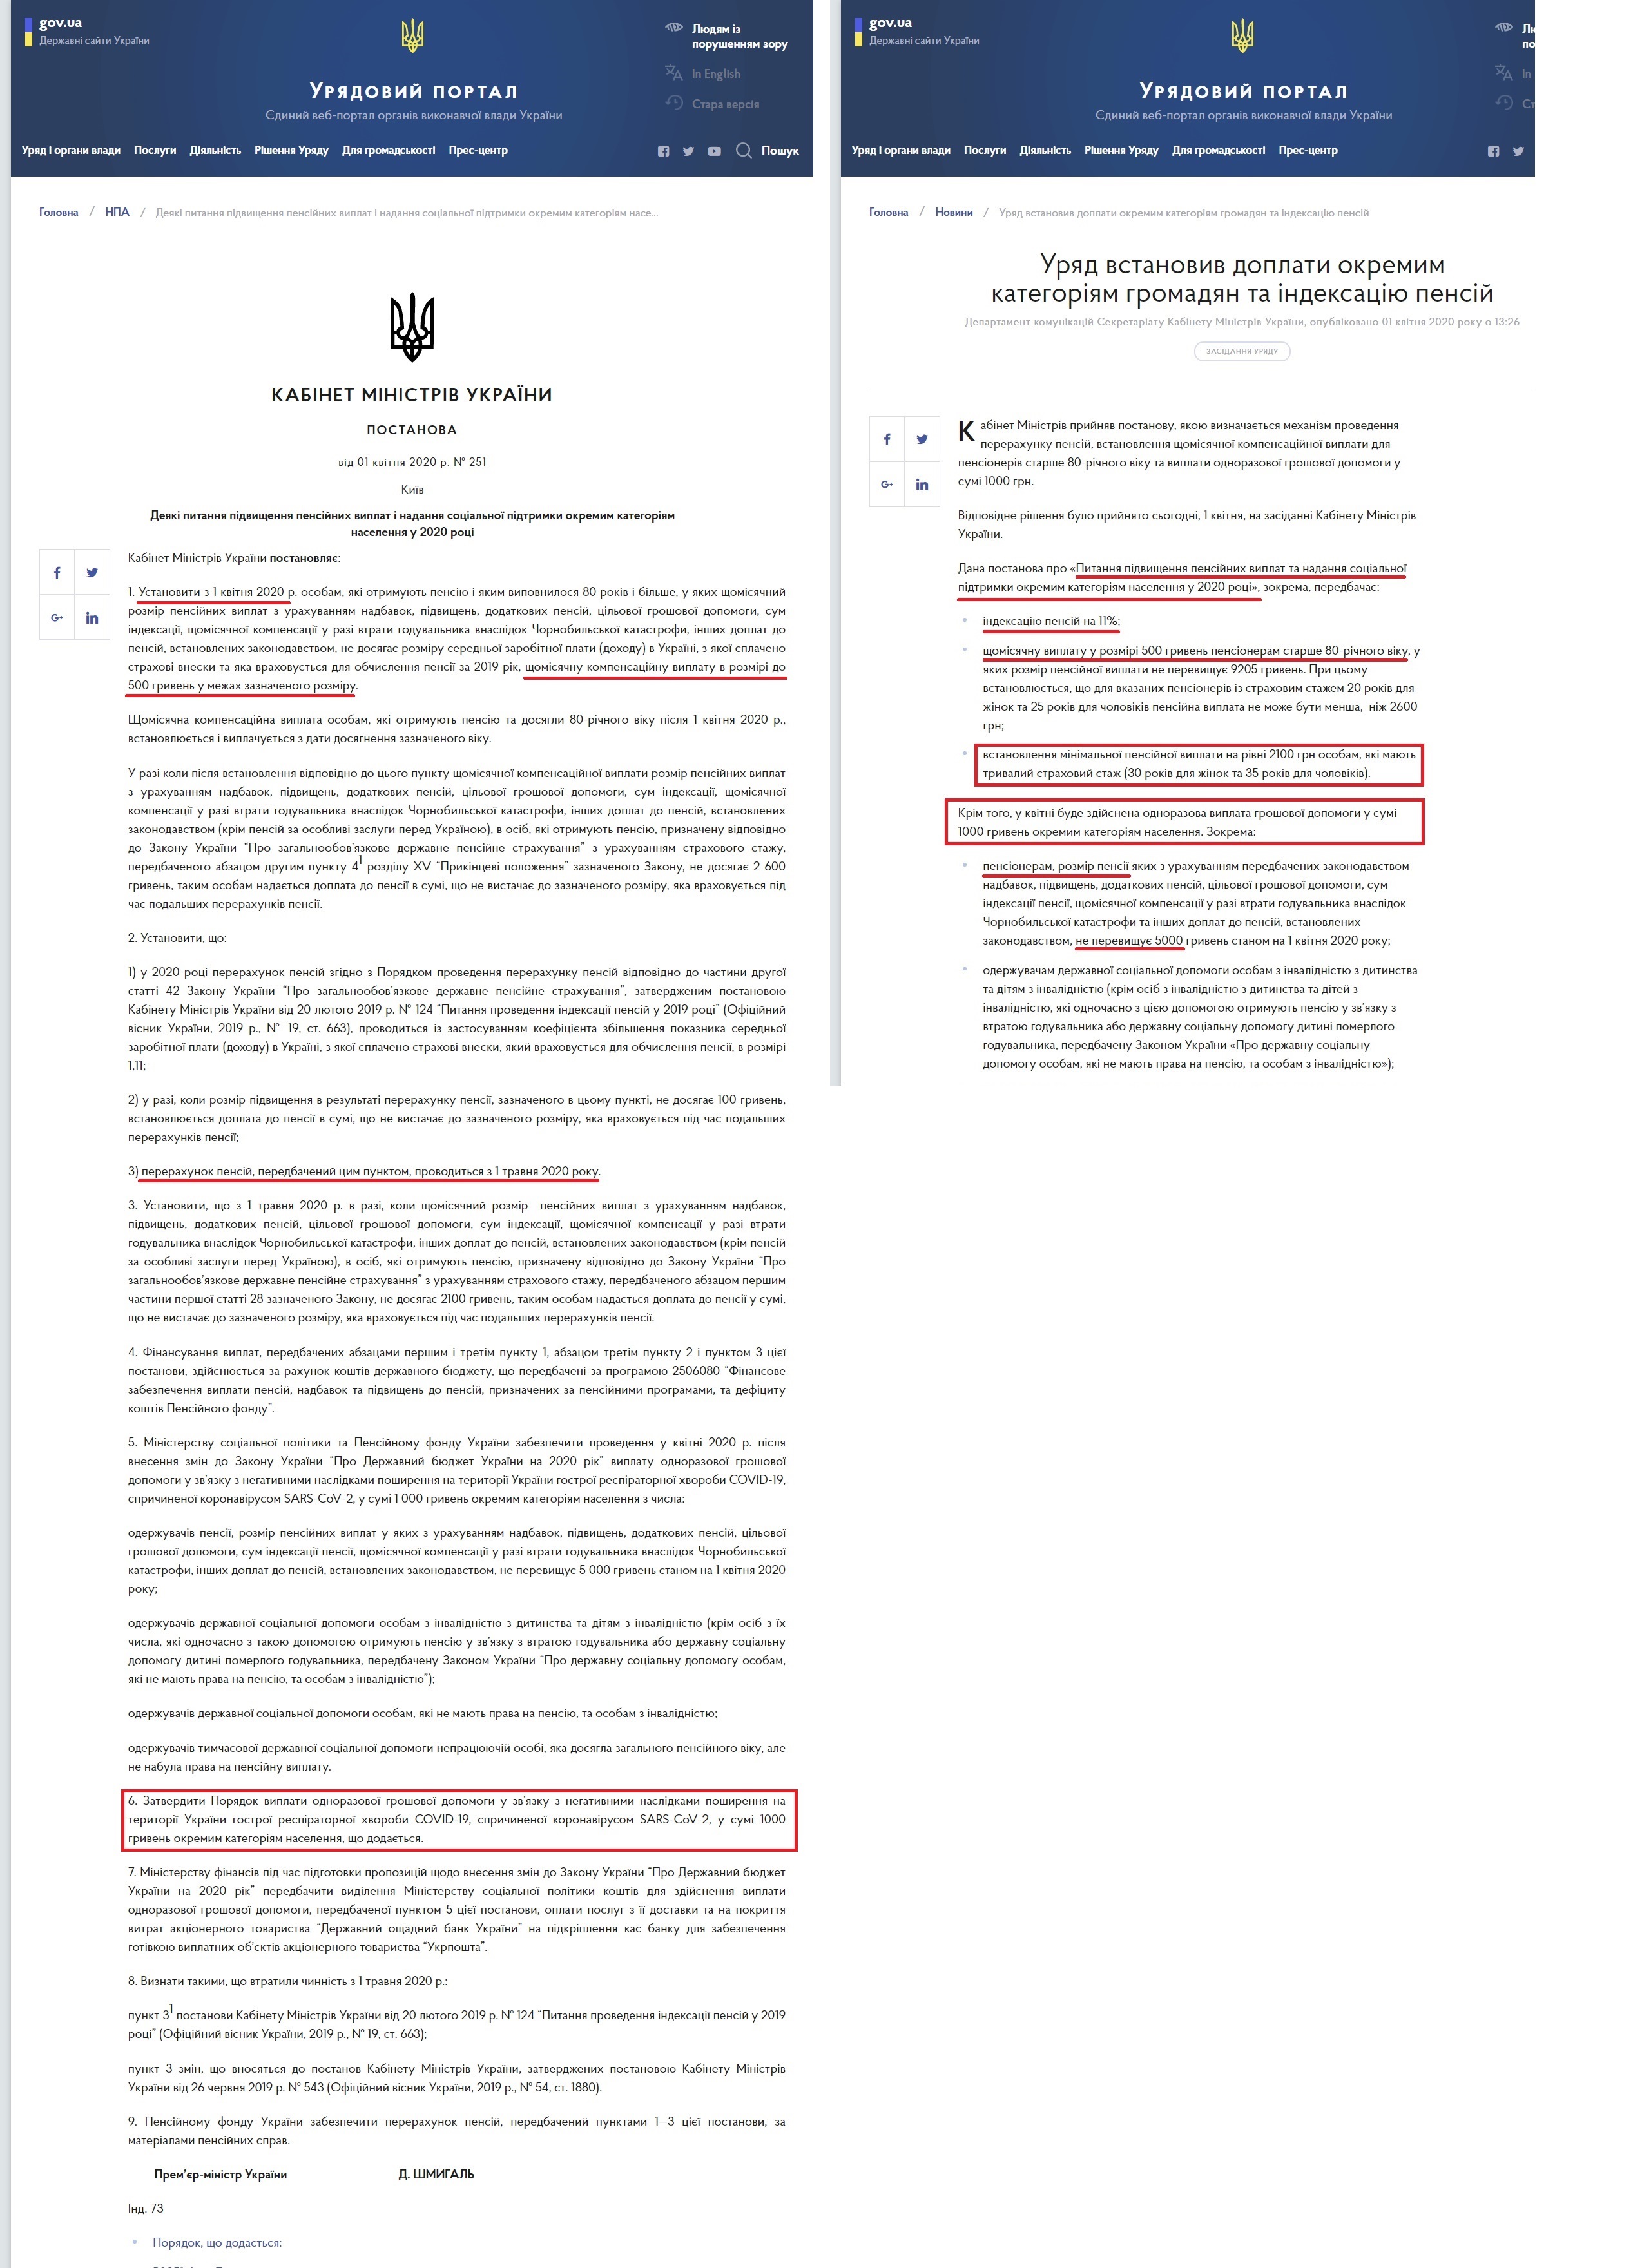 https://zakon.rada.gov.ua/laws/show/251-2020-%D0%BF#Text